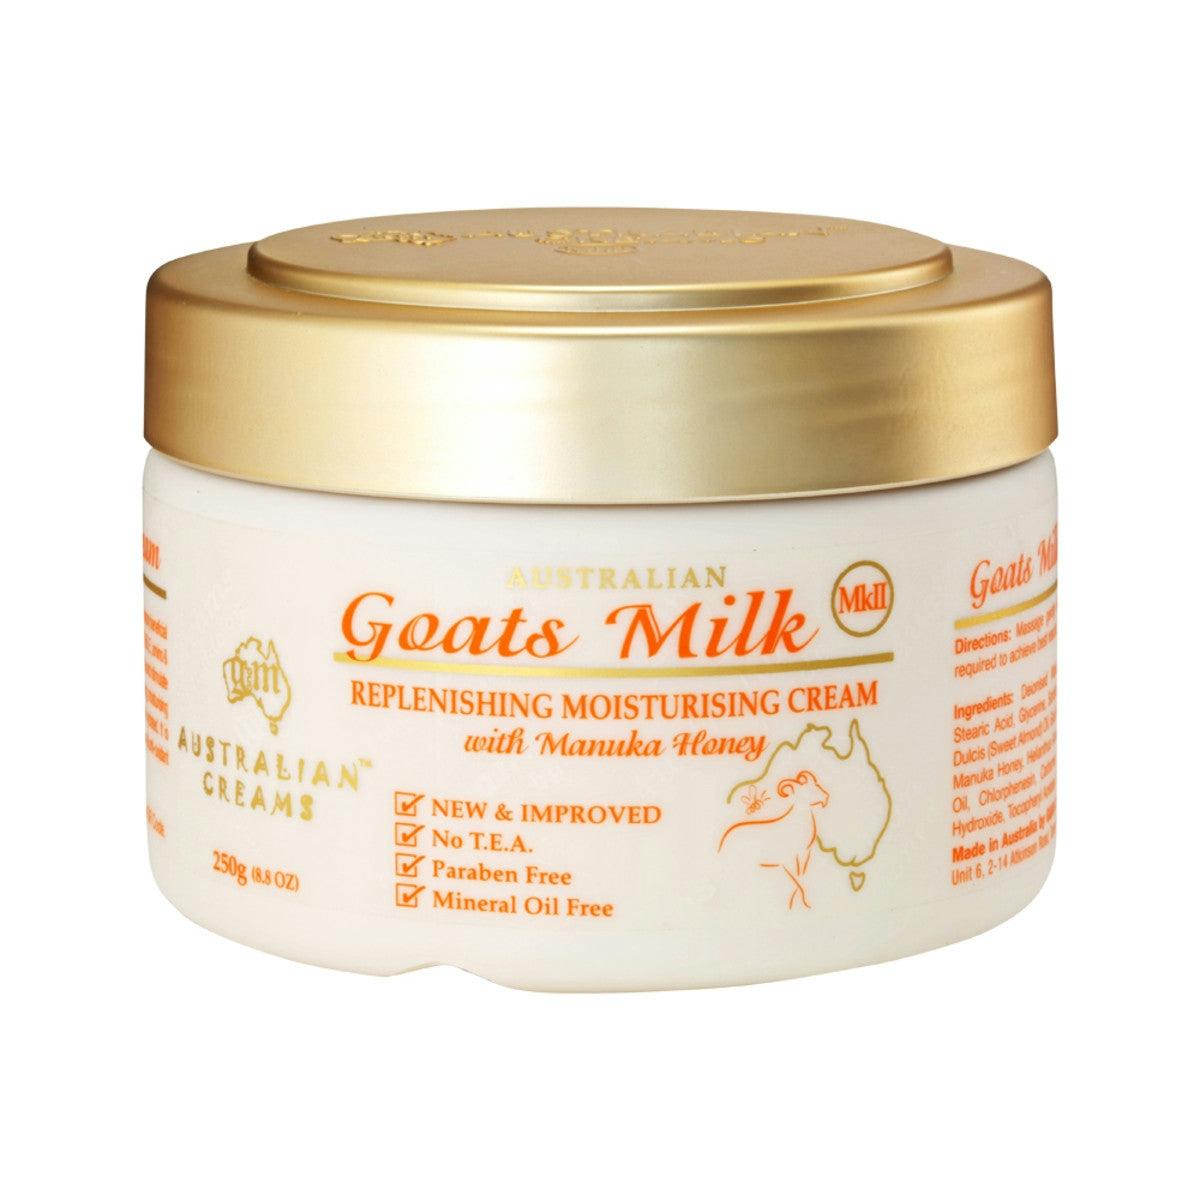 images of Australian Creams MkII Goats Milk Replenishing Moisturising Cream with Manuka Honey 250g on white background